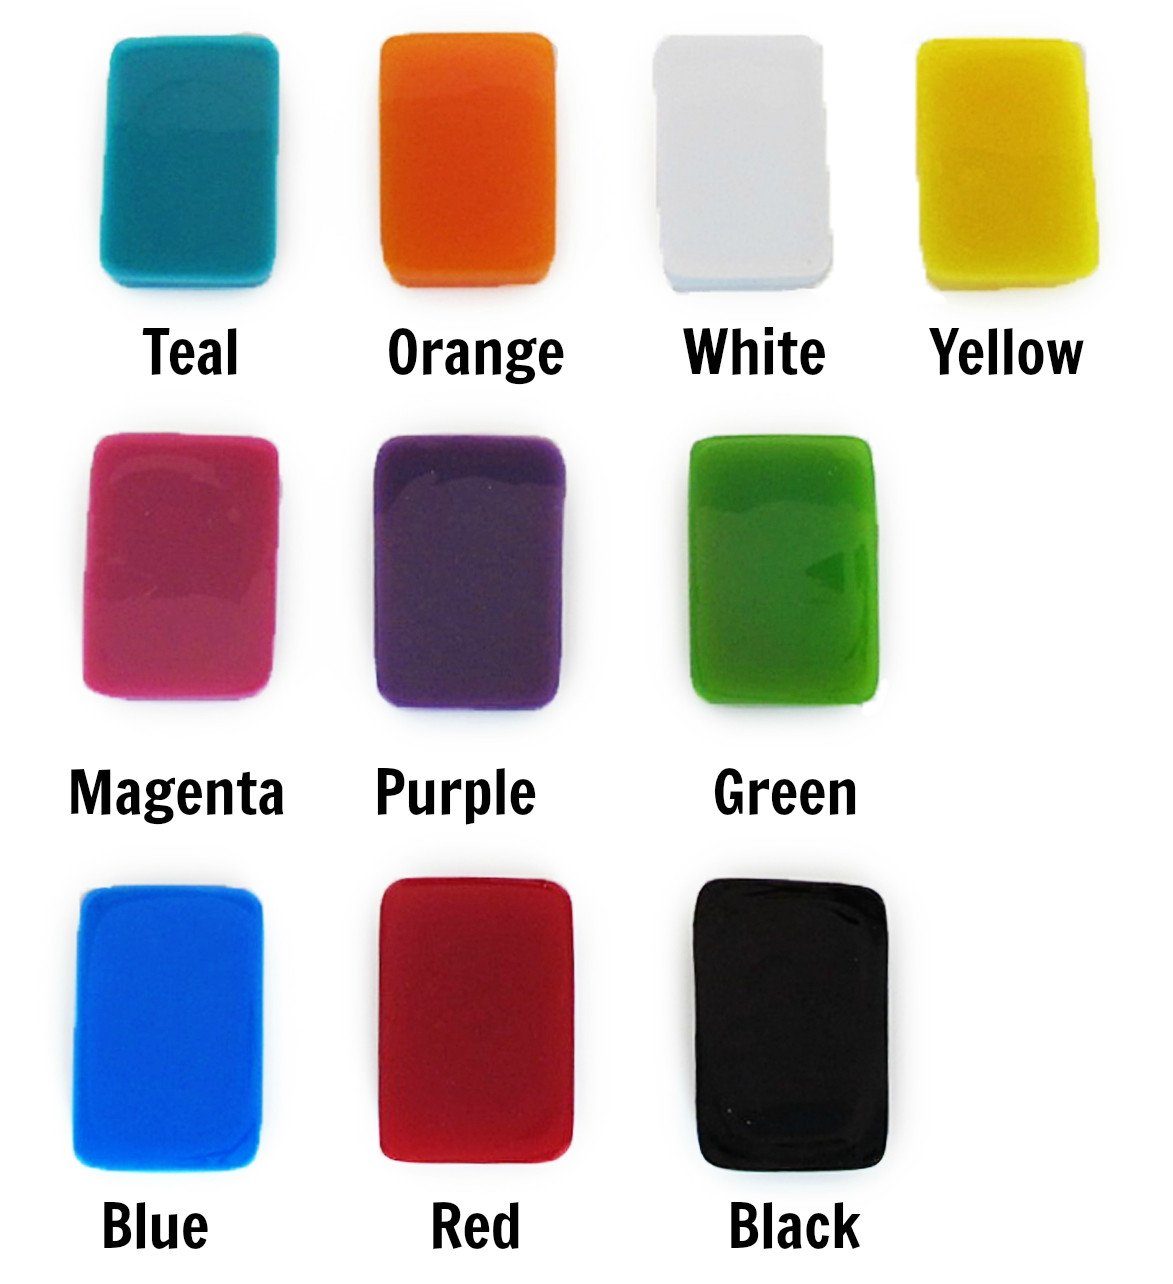 Coloured Epoxy Resin, 1000+ Colours